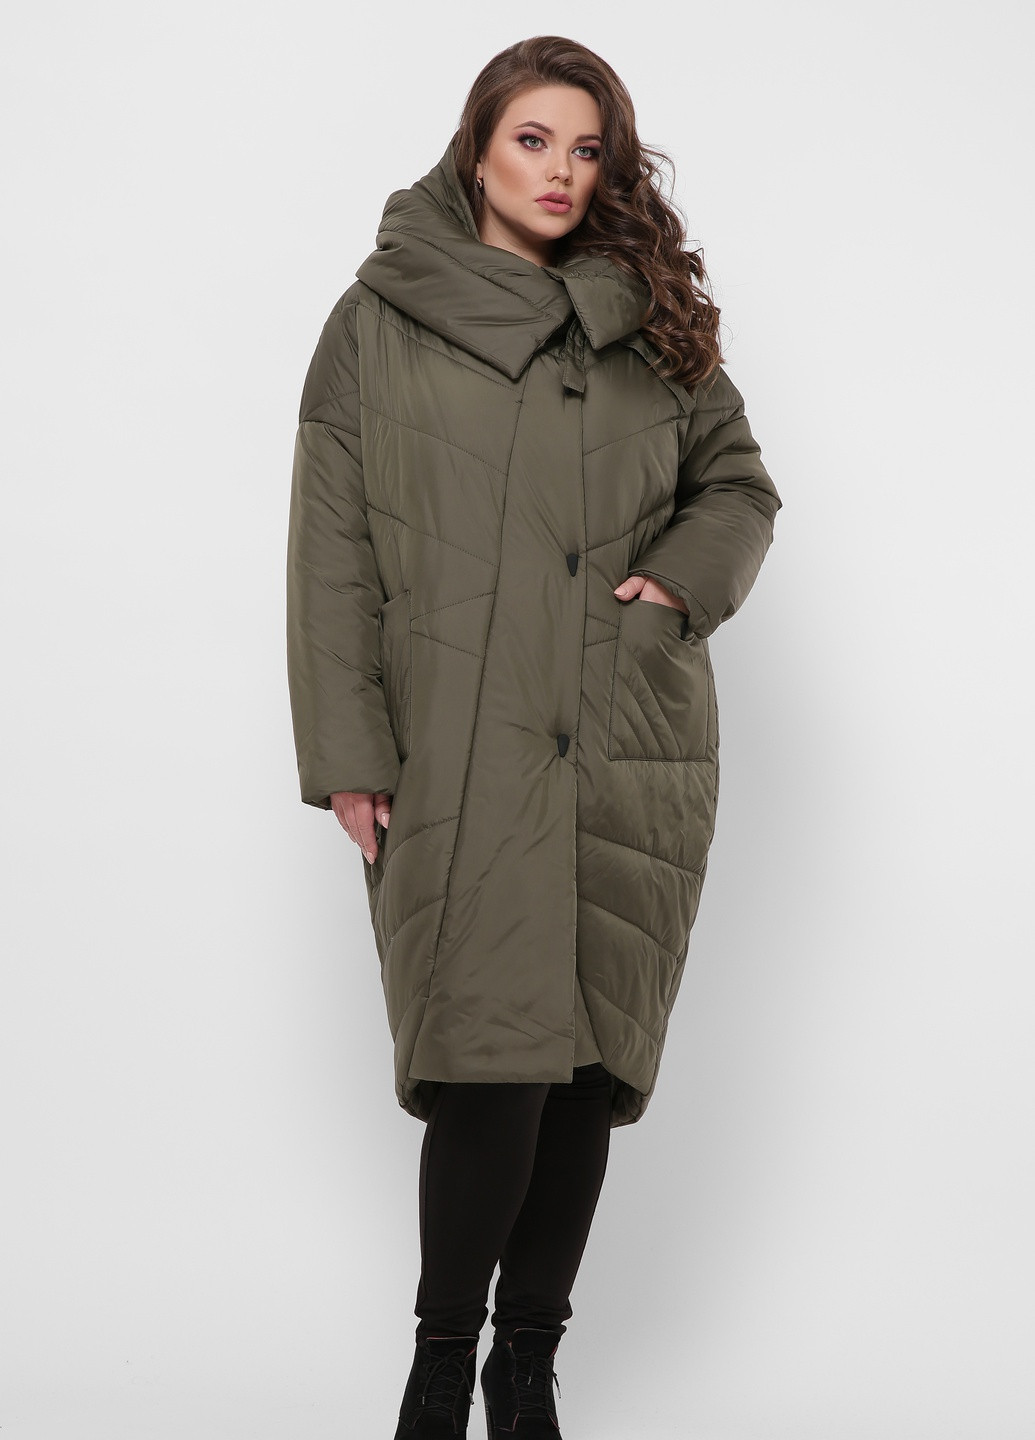 Оливковая зимняя удлиненная куртка blanket Welltre